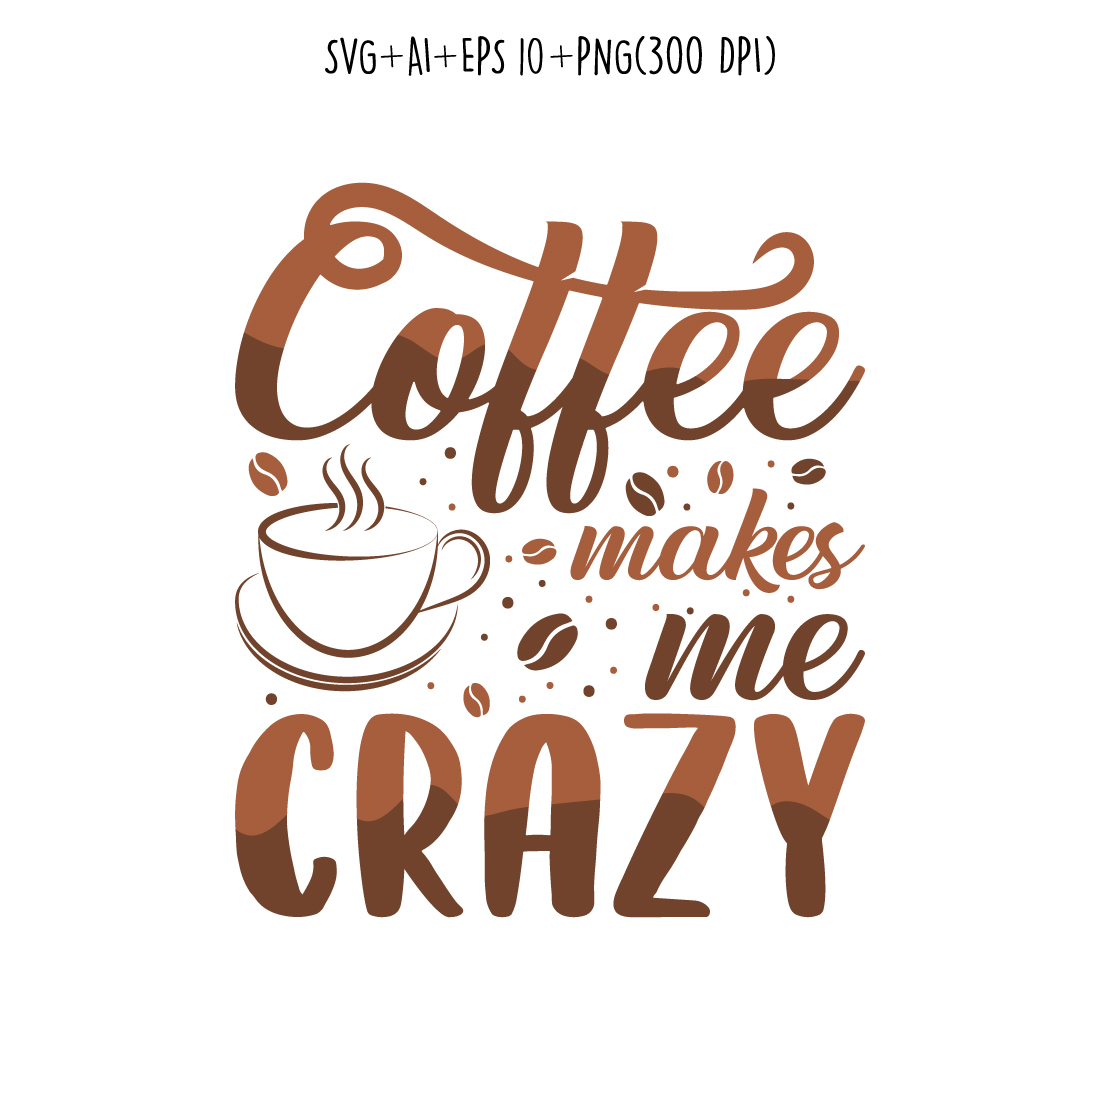 coffee makes me crazy coffee typography design for t-shirts, print, templates, logos, mug cover image.